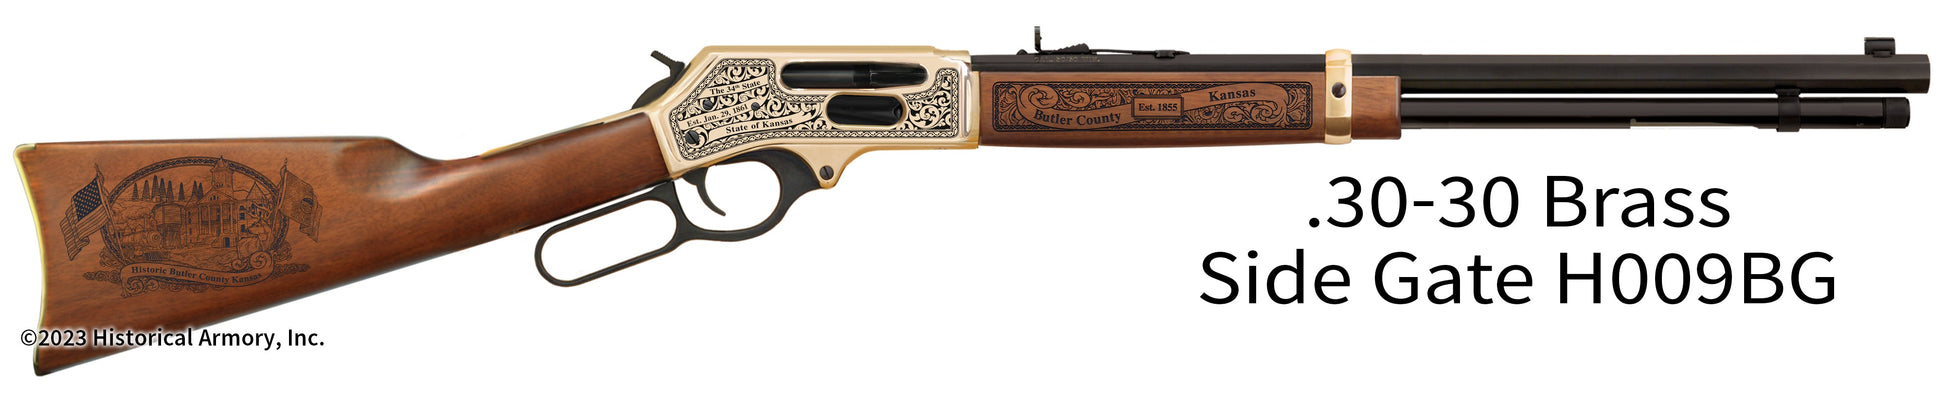 Butler County Kansas Engraved Henry .30-30 Brass Side Gate Rifle